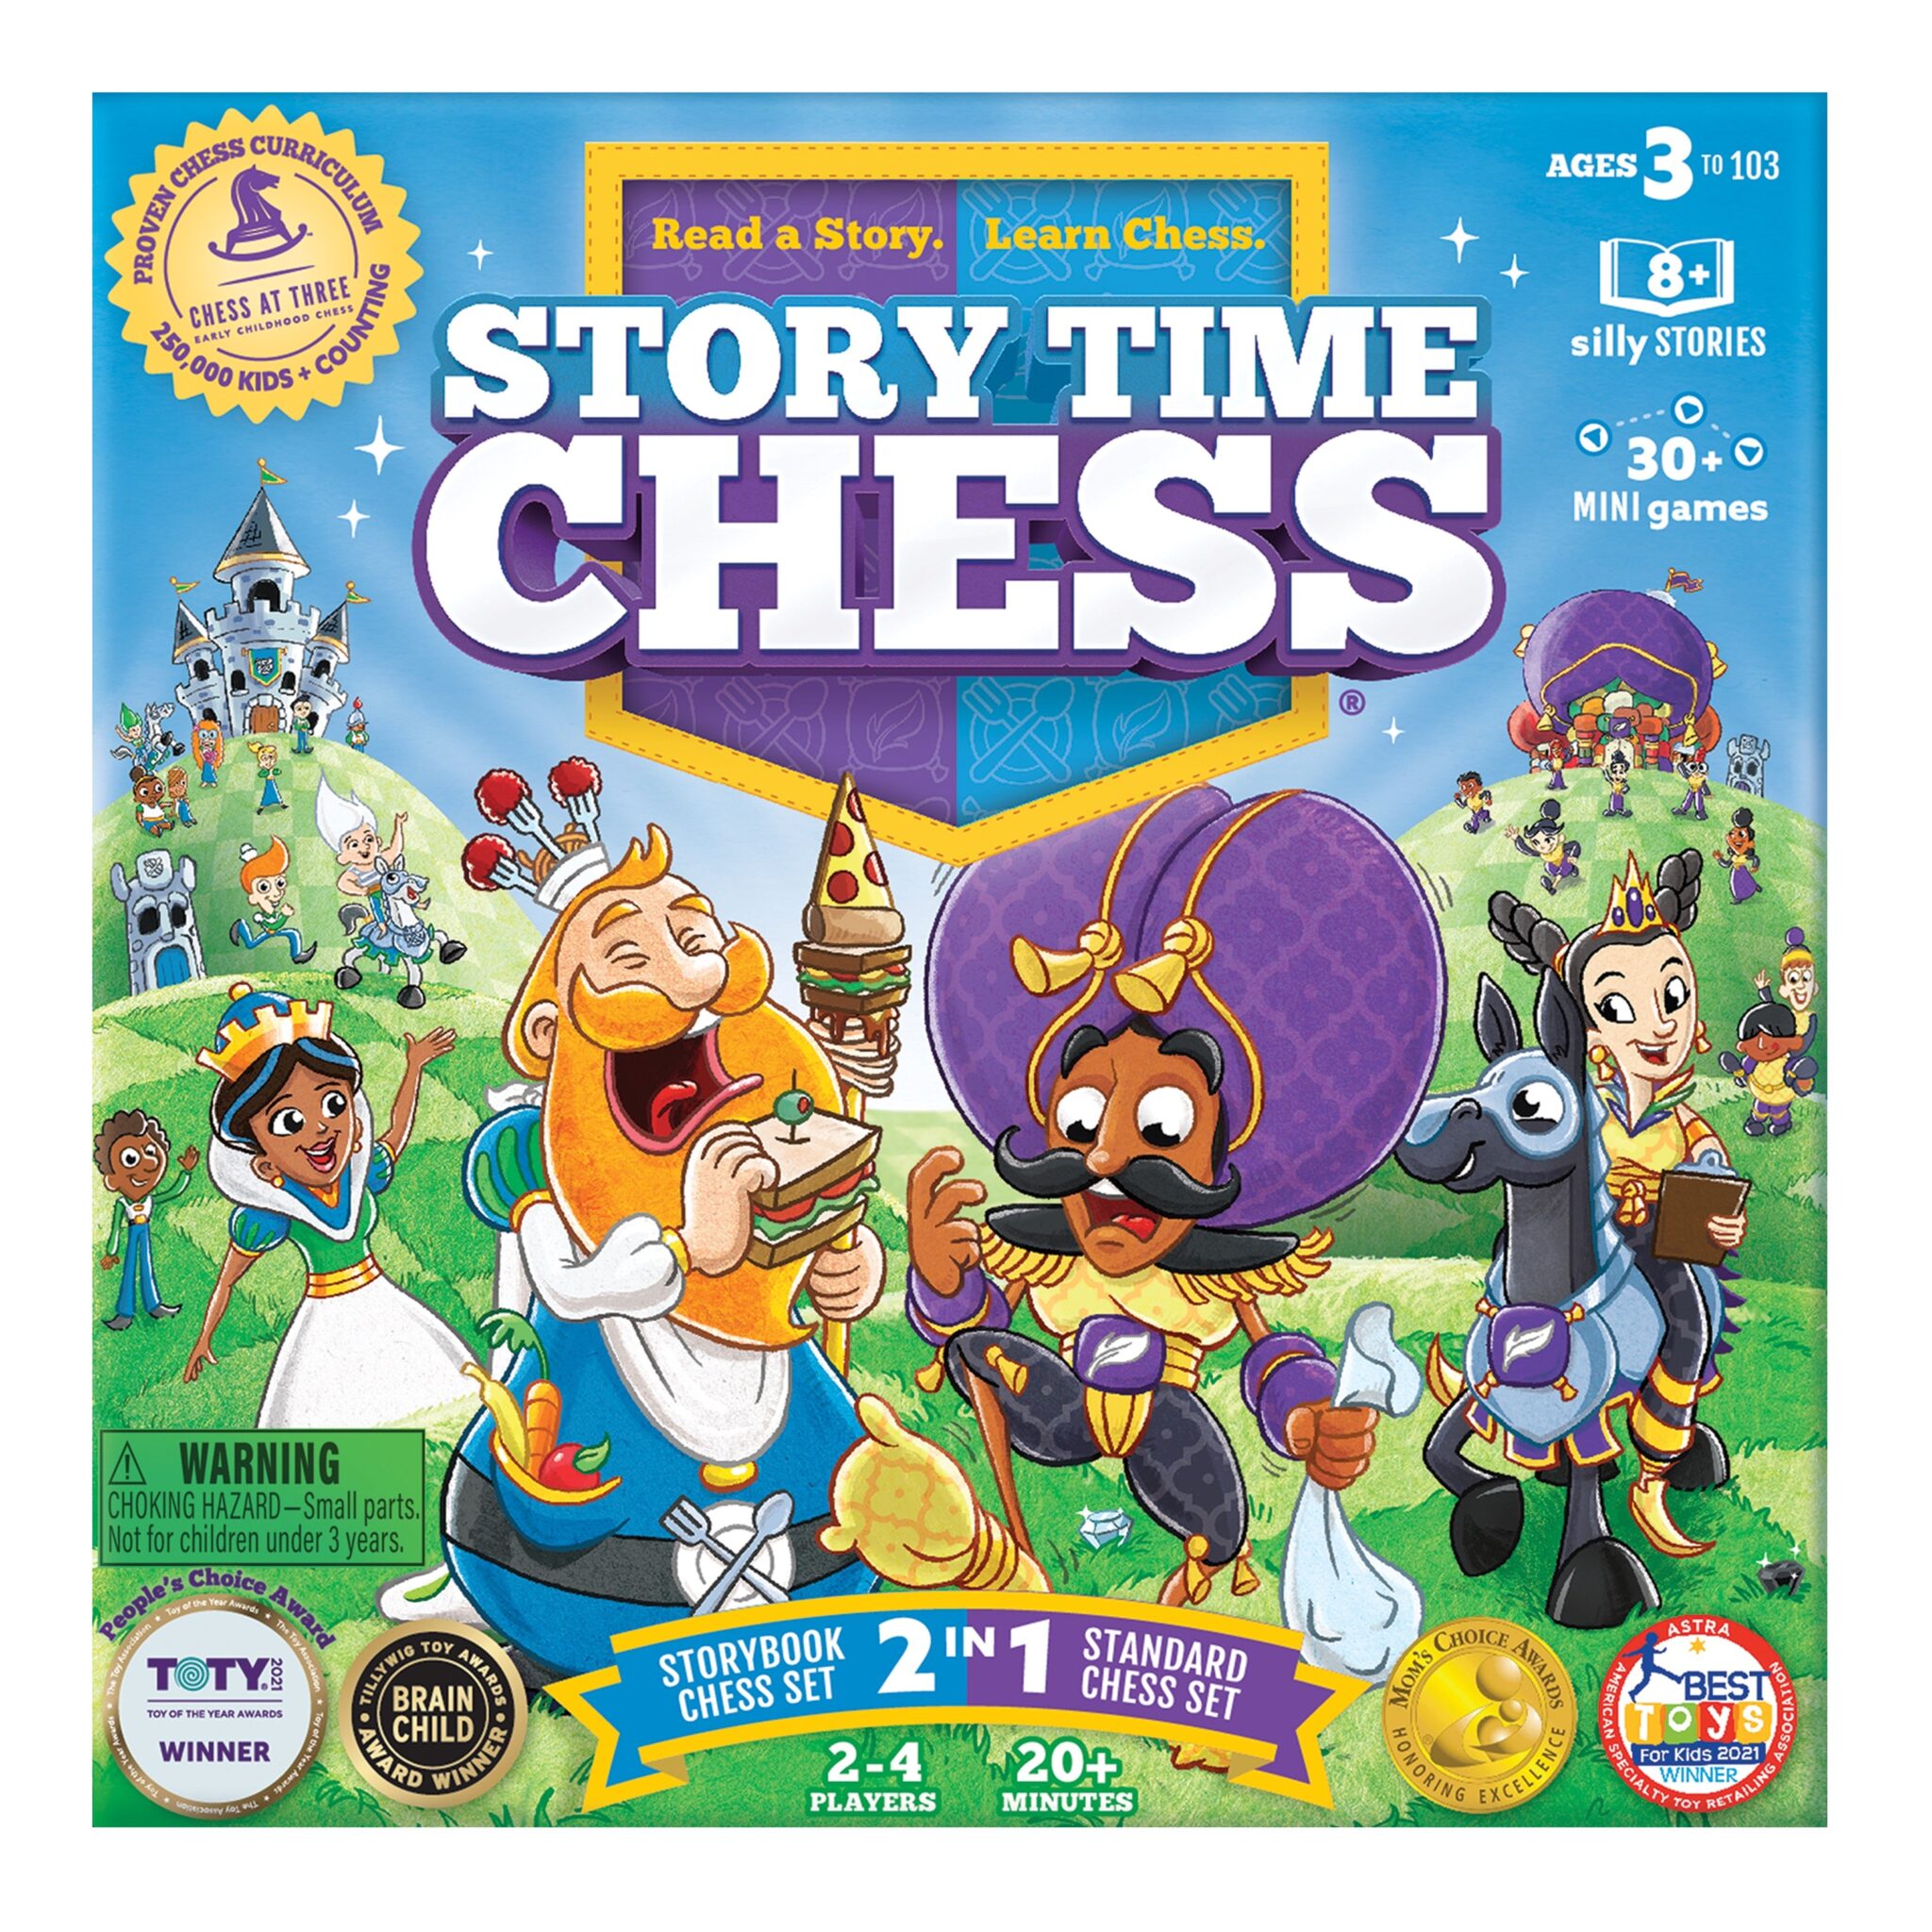 Story Time Chess box art